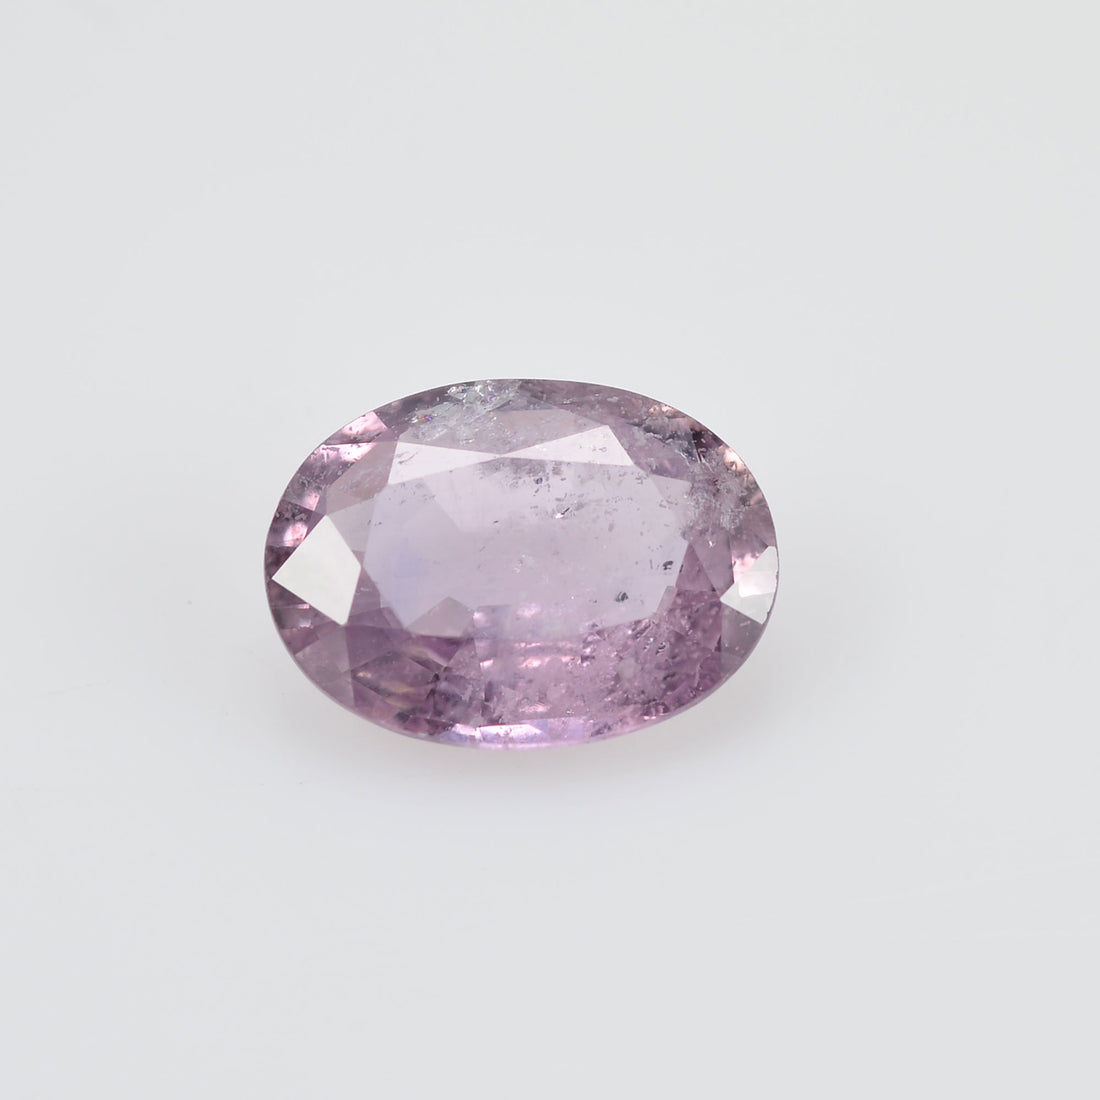 1.59 cts Natural Purple Sapphire Loose Gemstone Oval Cut - Thai Gems Export Ltd.